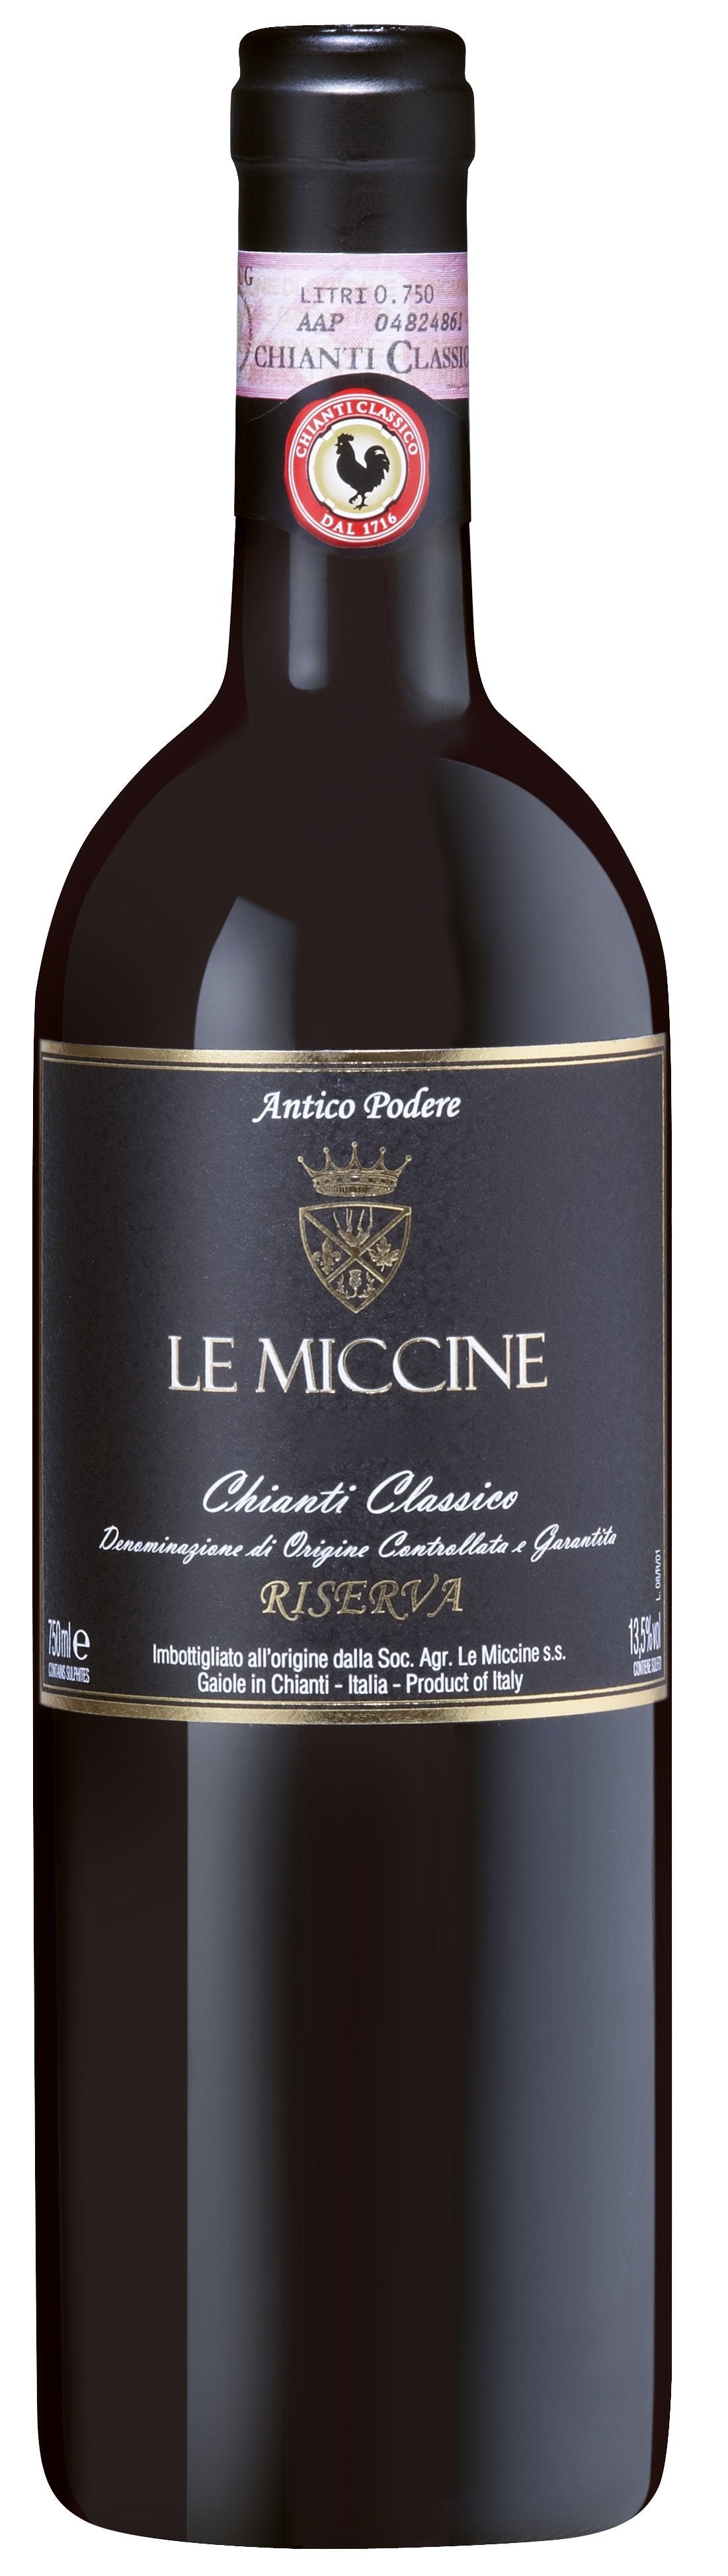 Le Miccine Chianti Classico Riserva - Certified Organic